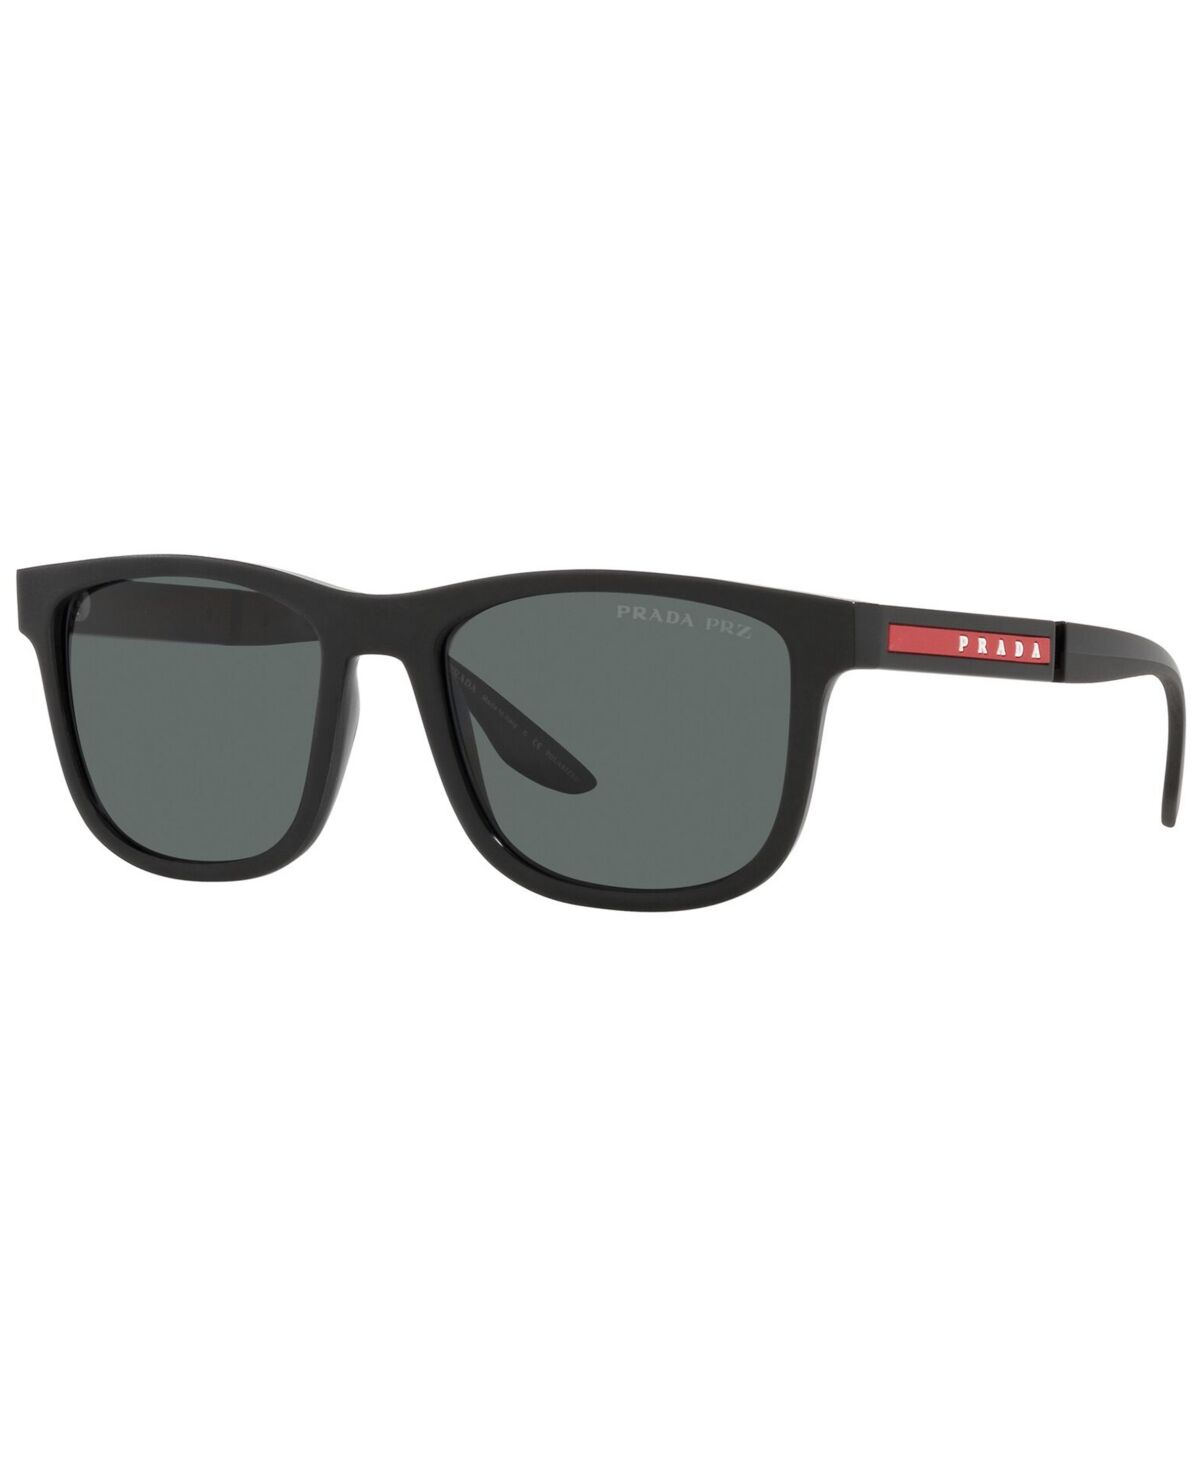 Prada Linea Rossa Men's Polarized Sunglasses, Ps 04XS 54 - BLACK RUBBER/BLACK/POLAR DARK GREY